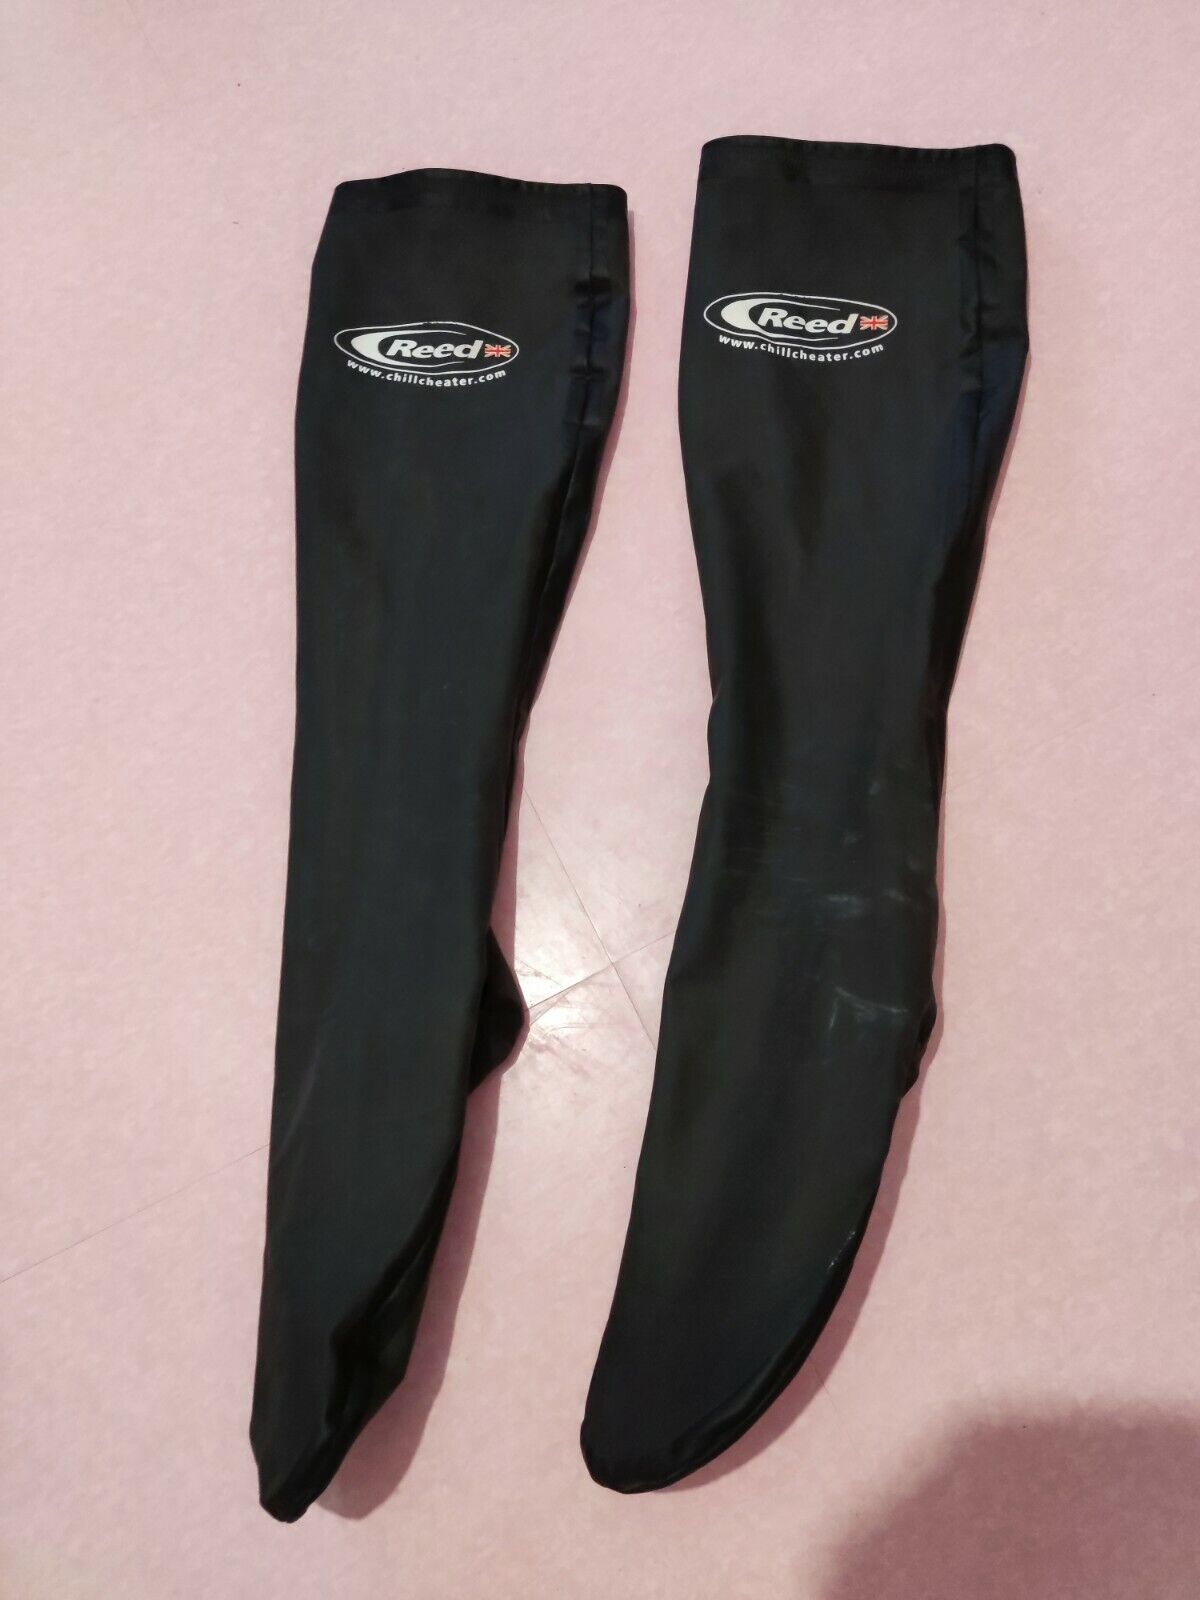 Reed Chillcheater black Wading Sock large 7-9 used 